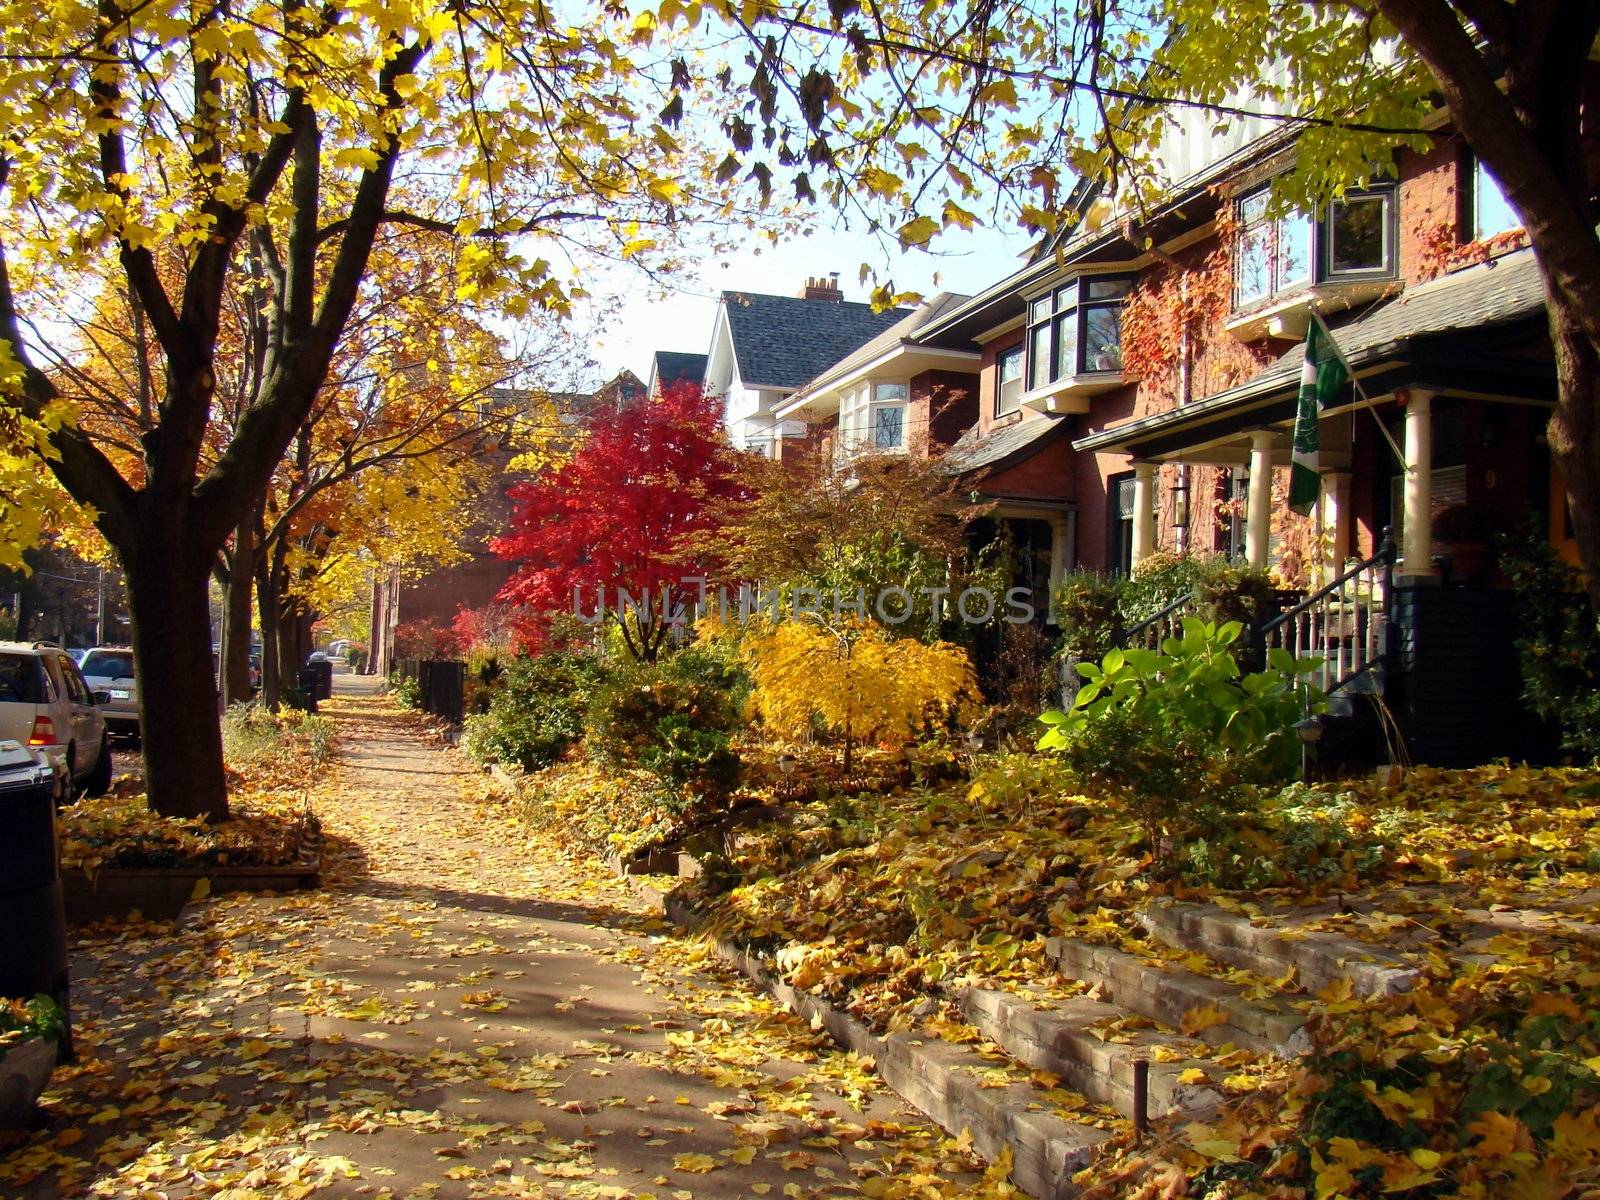 Autumn City SideWalk showing fall colors